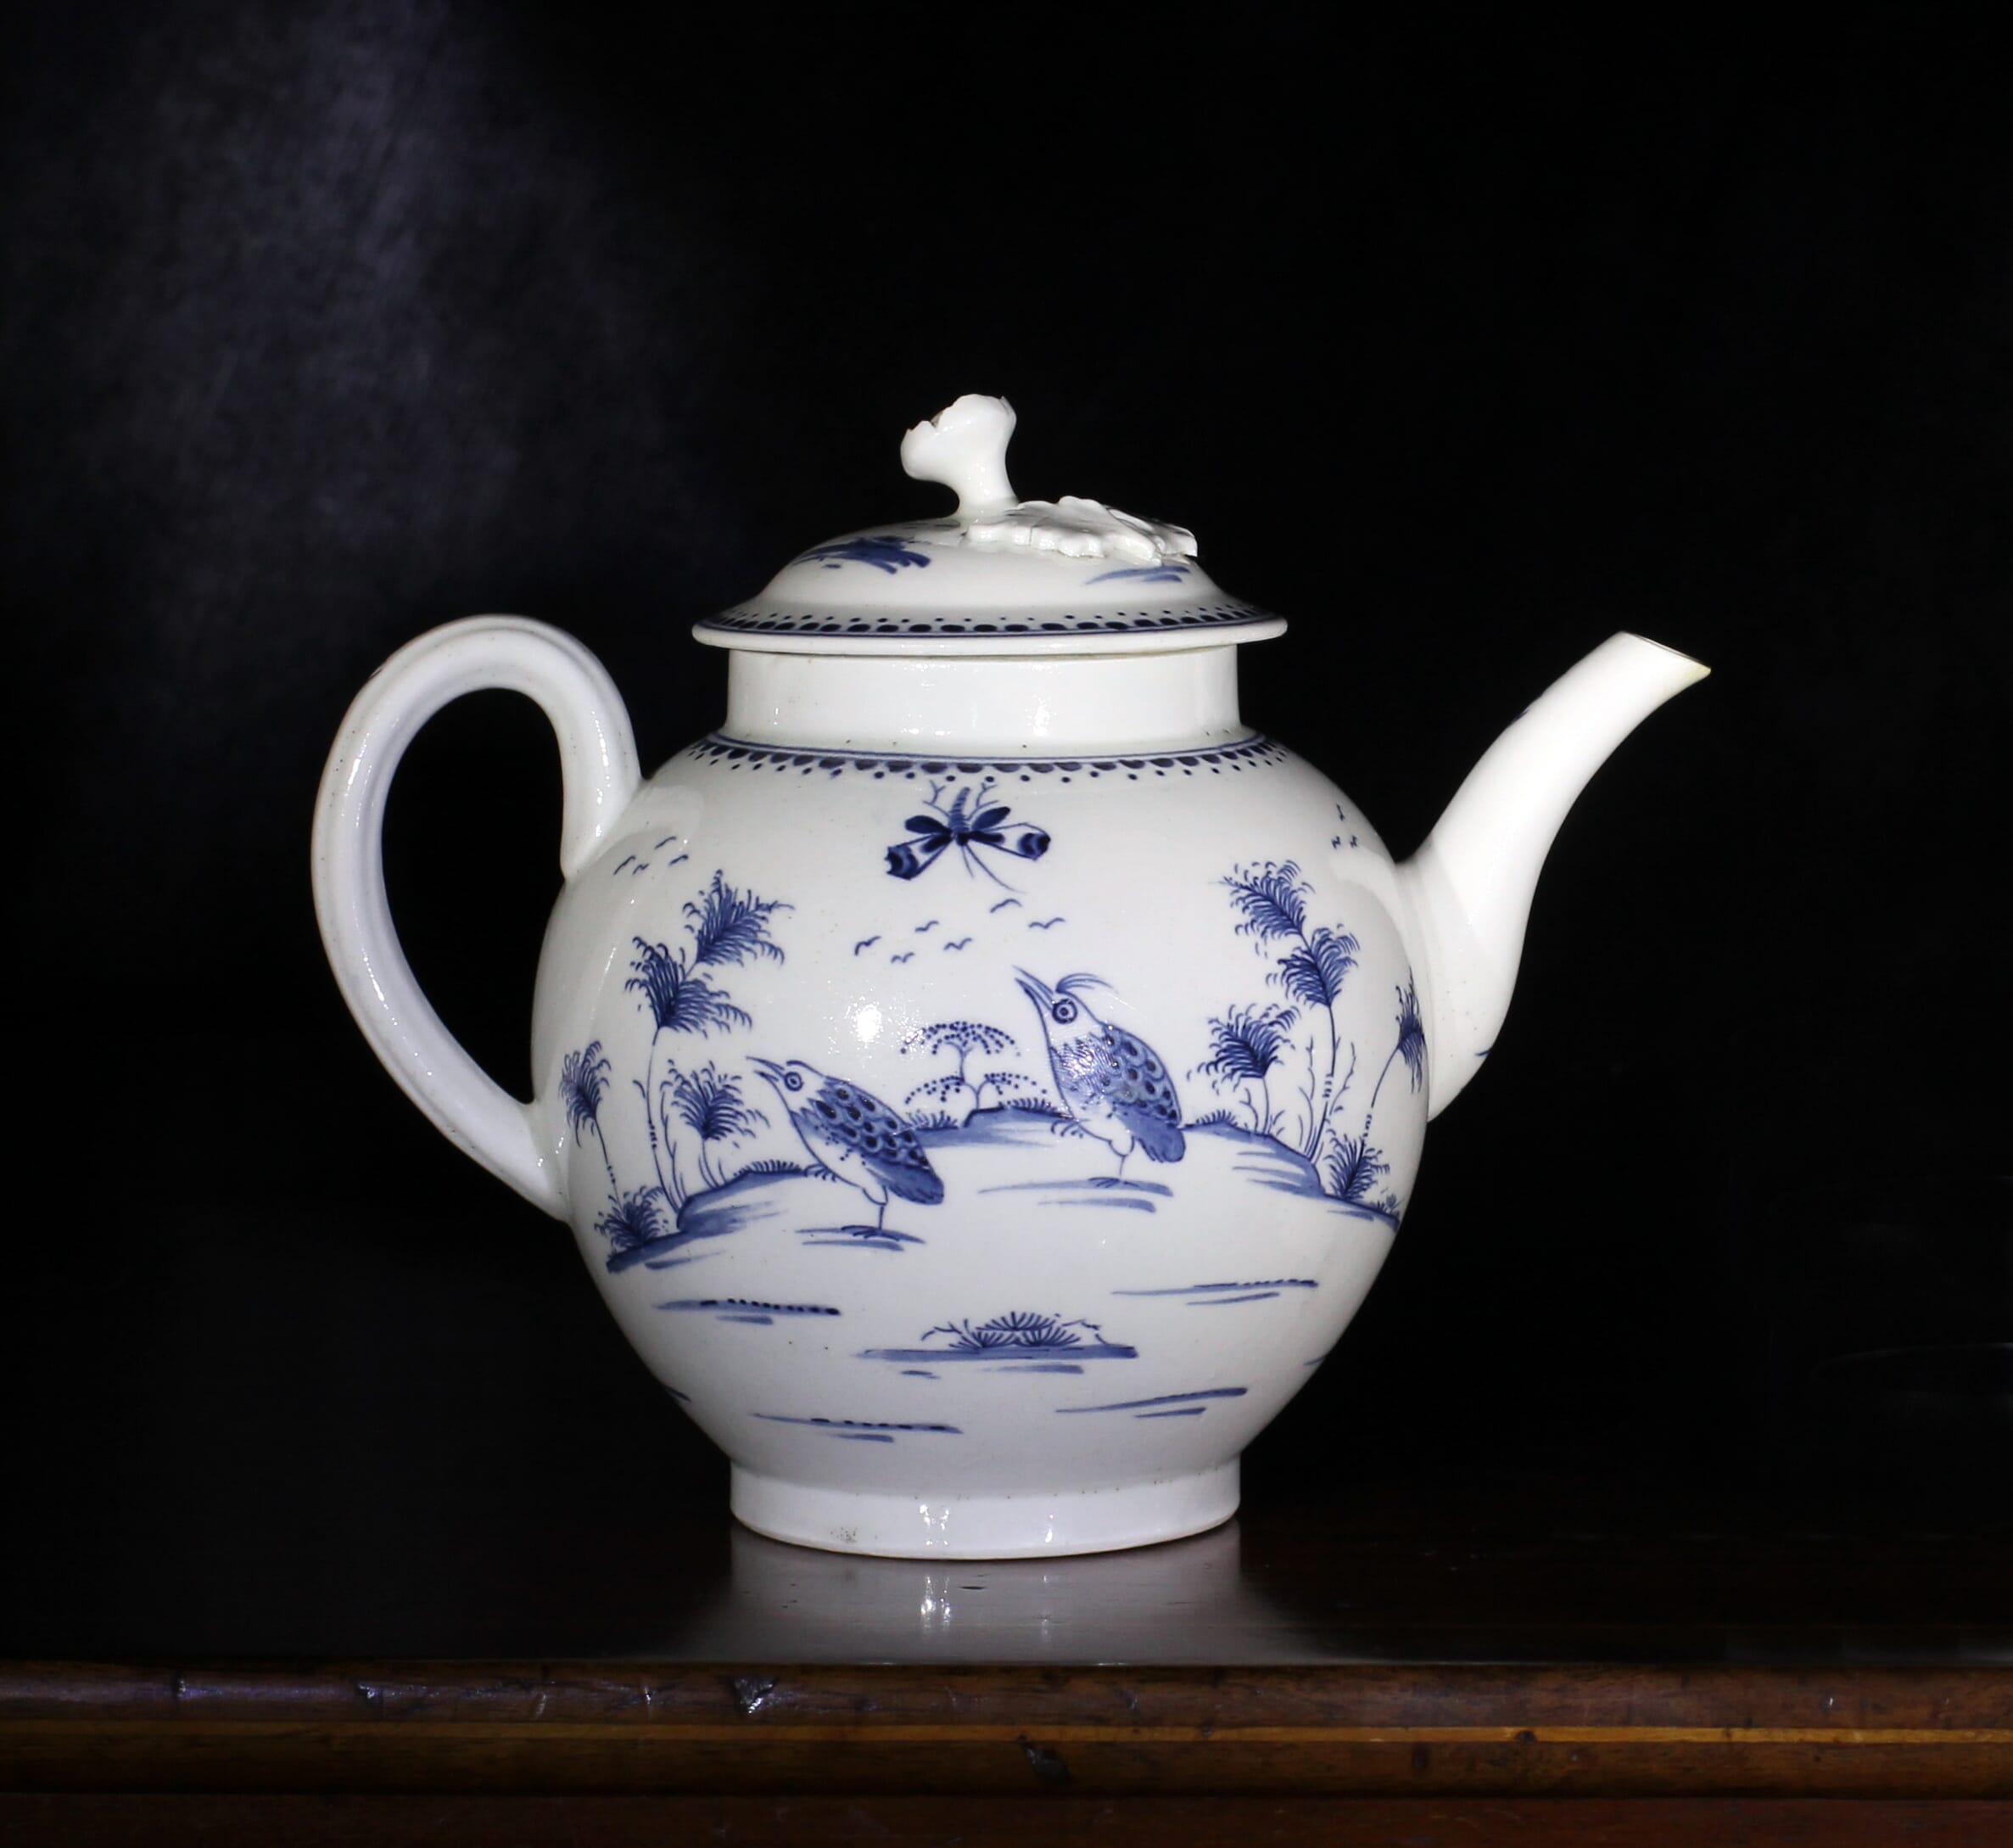 Worcester blue & white teapot, 'Two Quail' pattern, c.1770-0